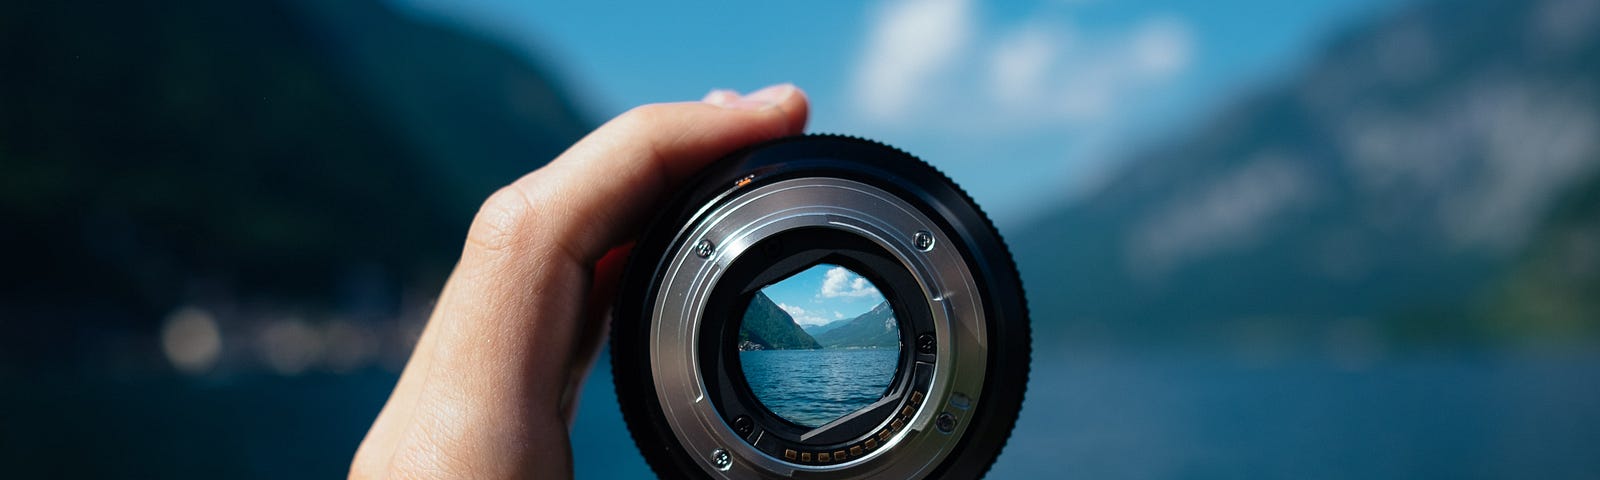 Lens focusing on infinite distance